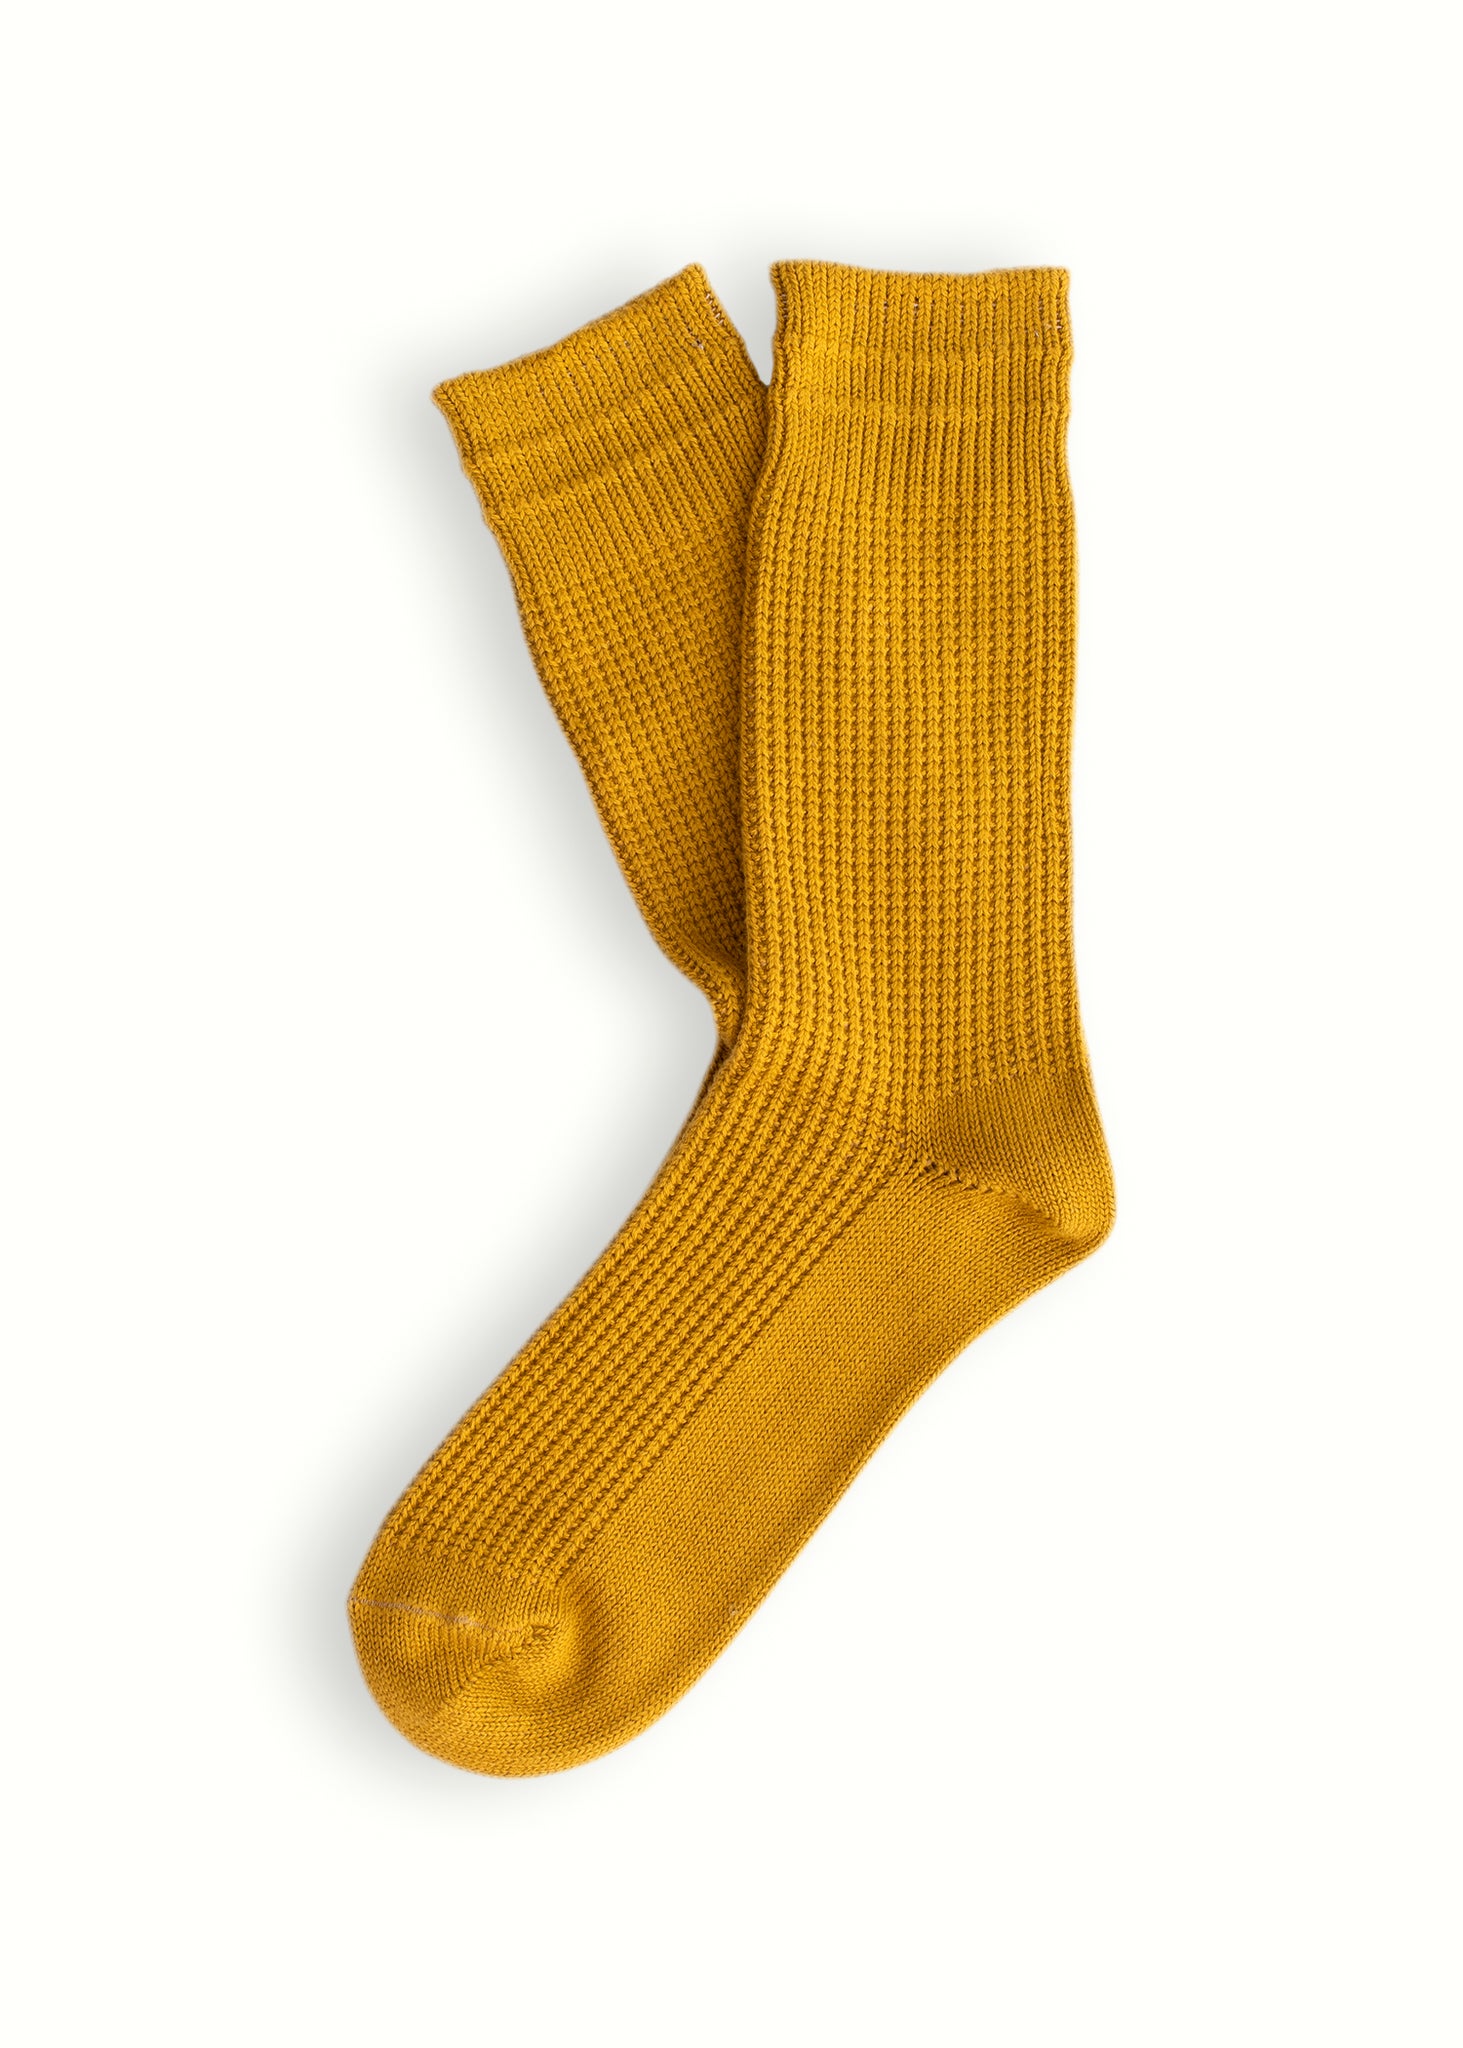 Thunders Love Link Mustard Socks